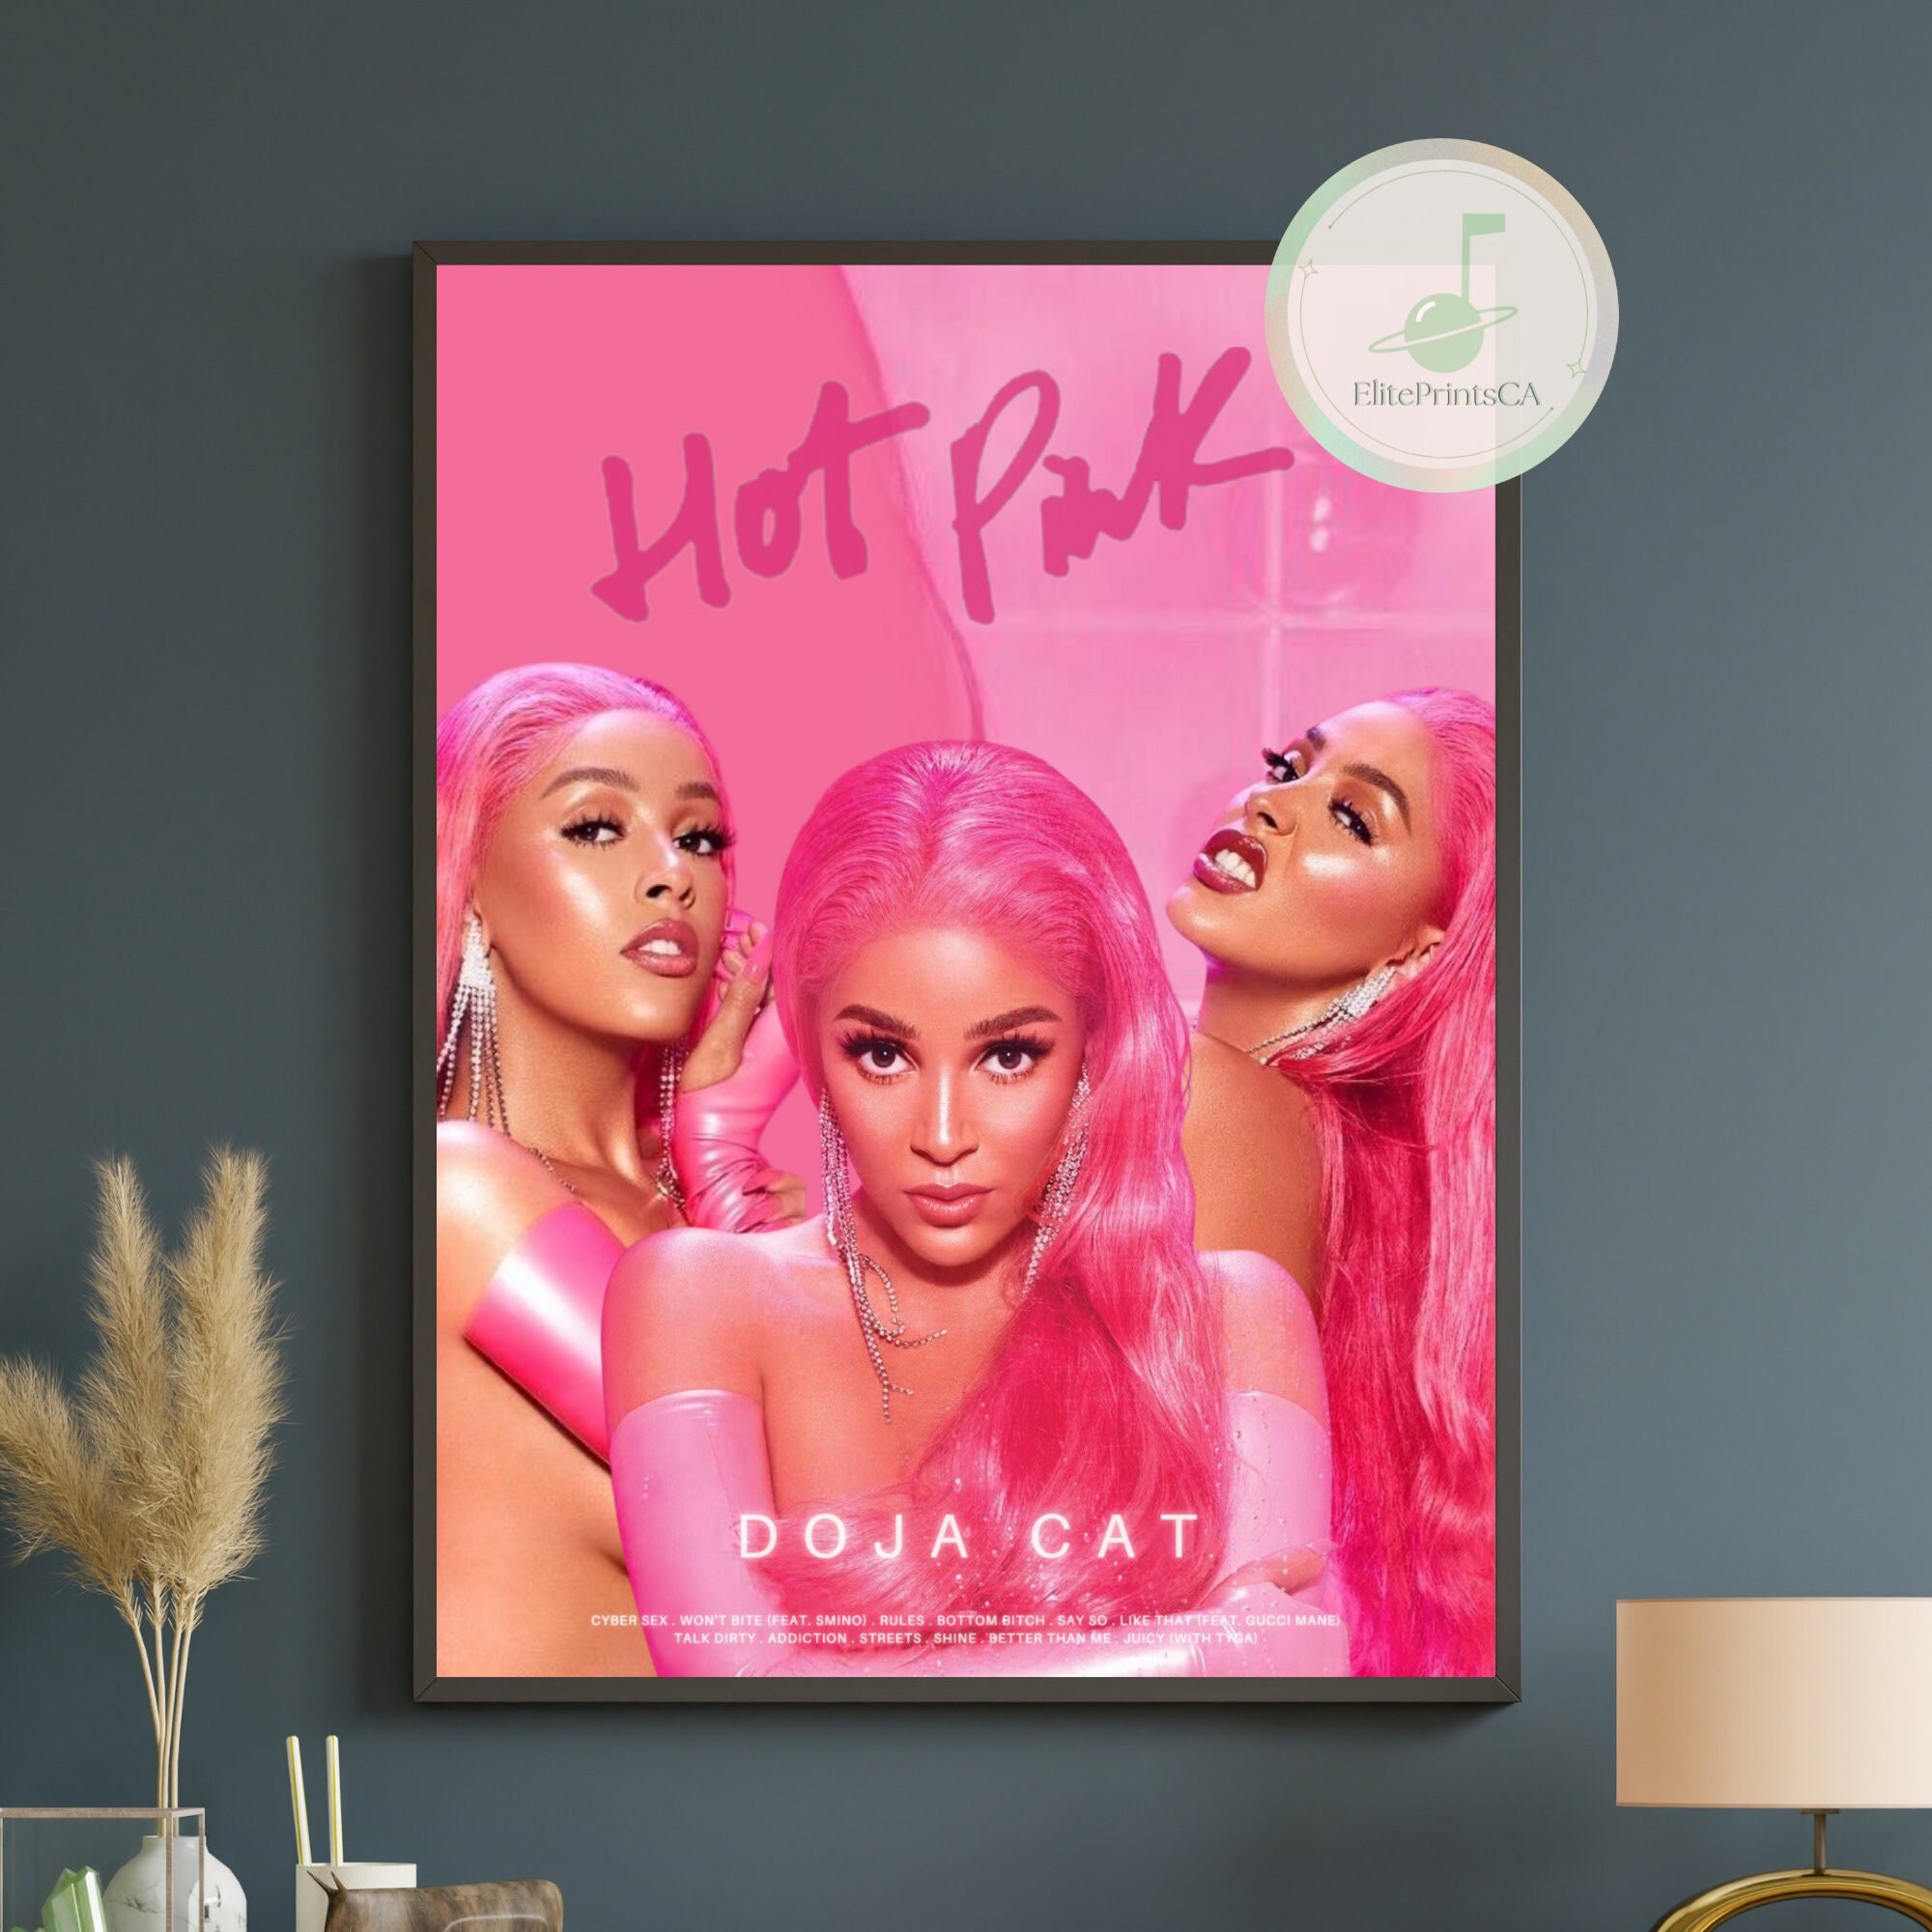 Hot Pink by Doja Cat Album Poster